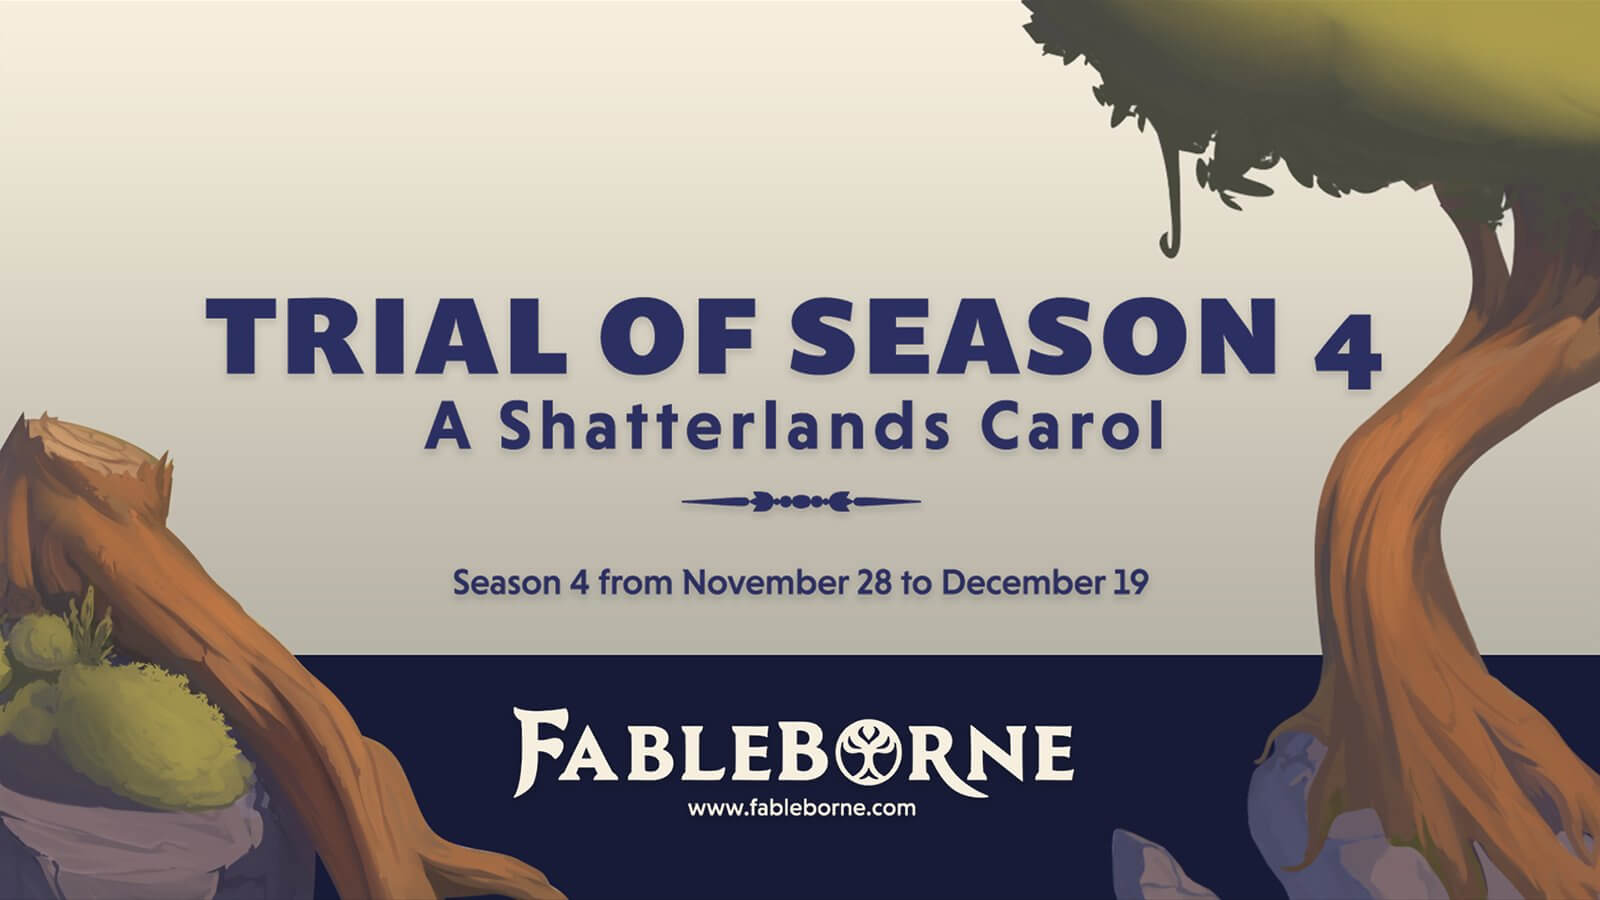 Fableborne Announces Trial of Season 4 A Shatterlands Carol